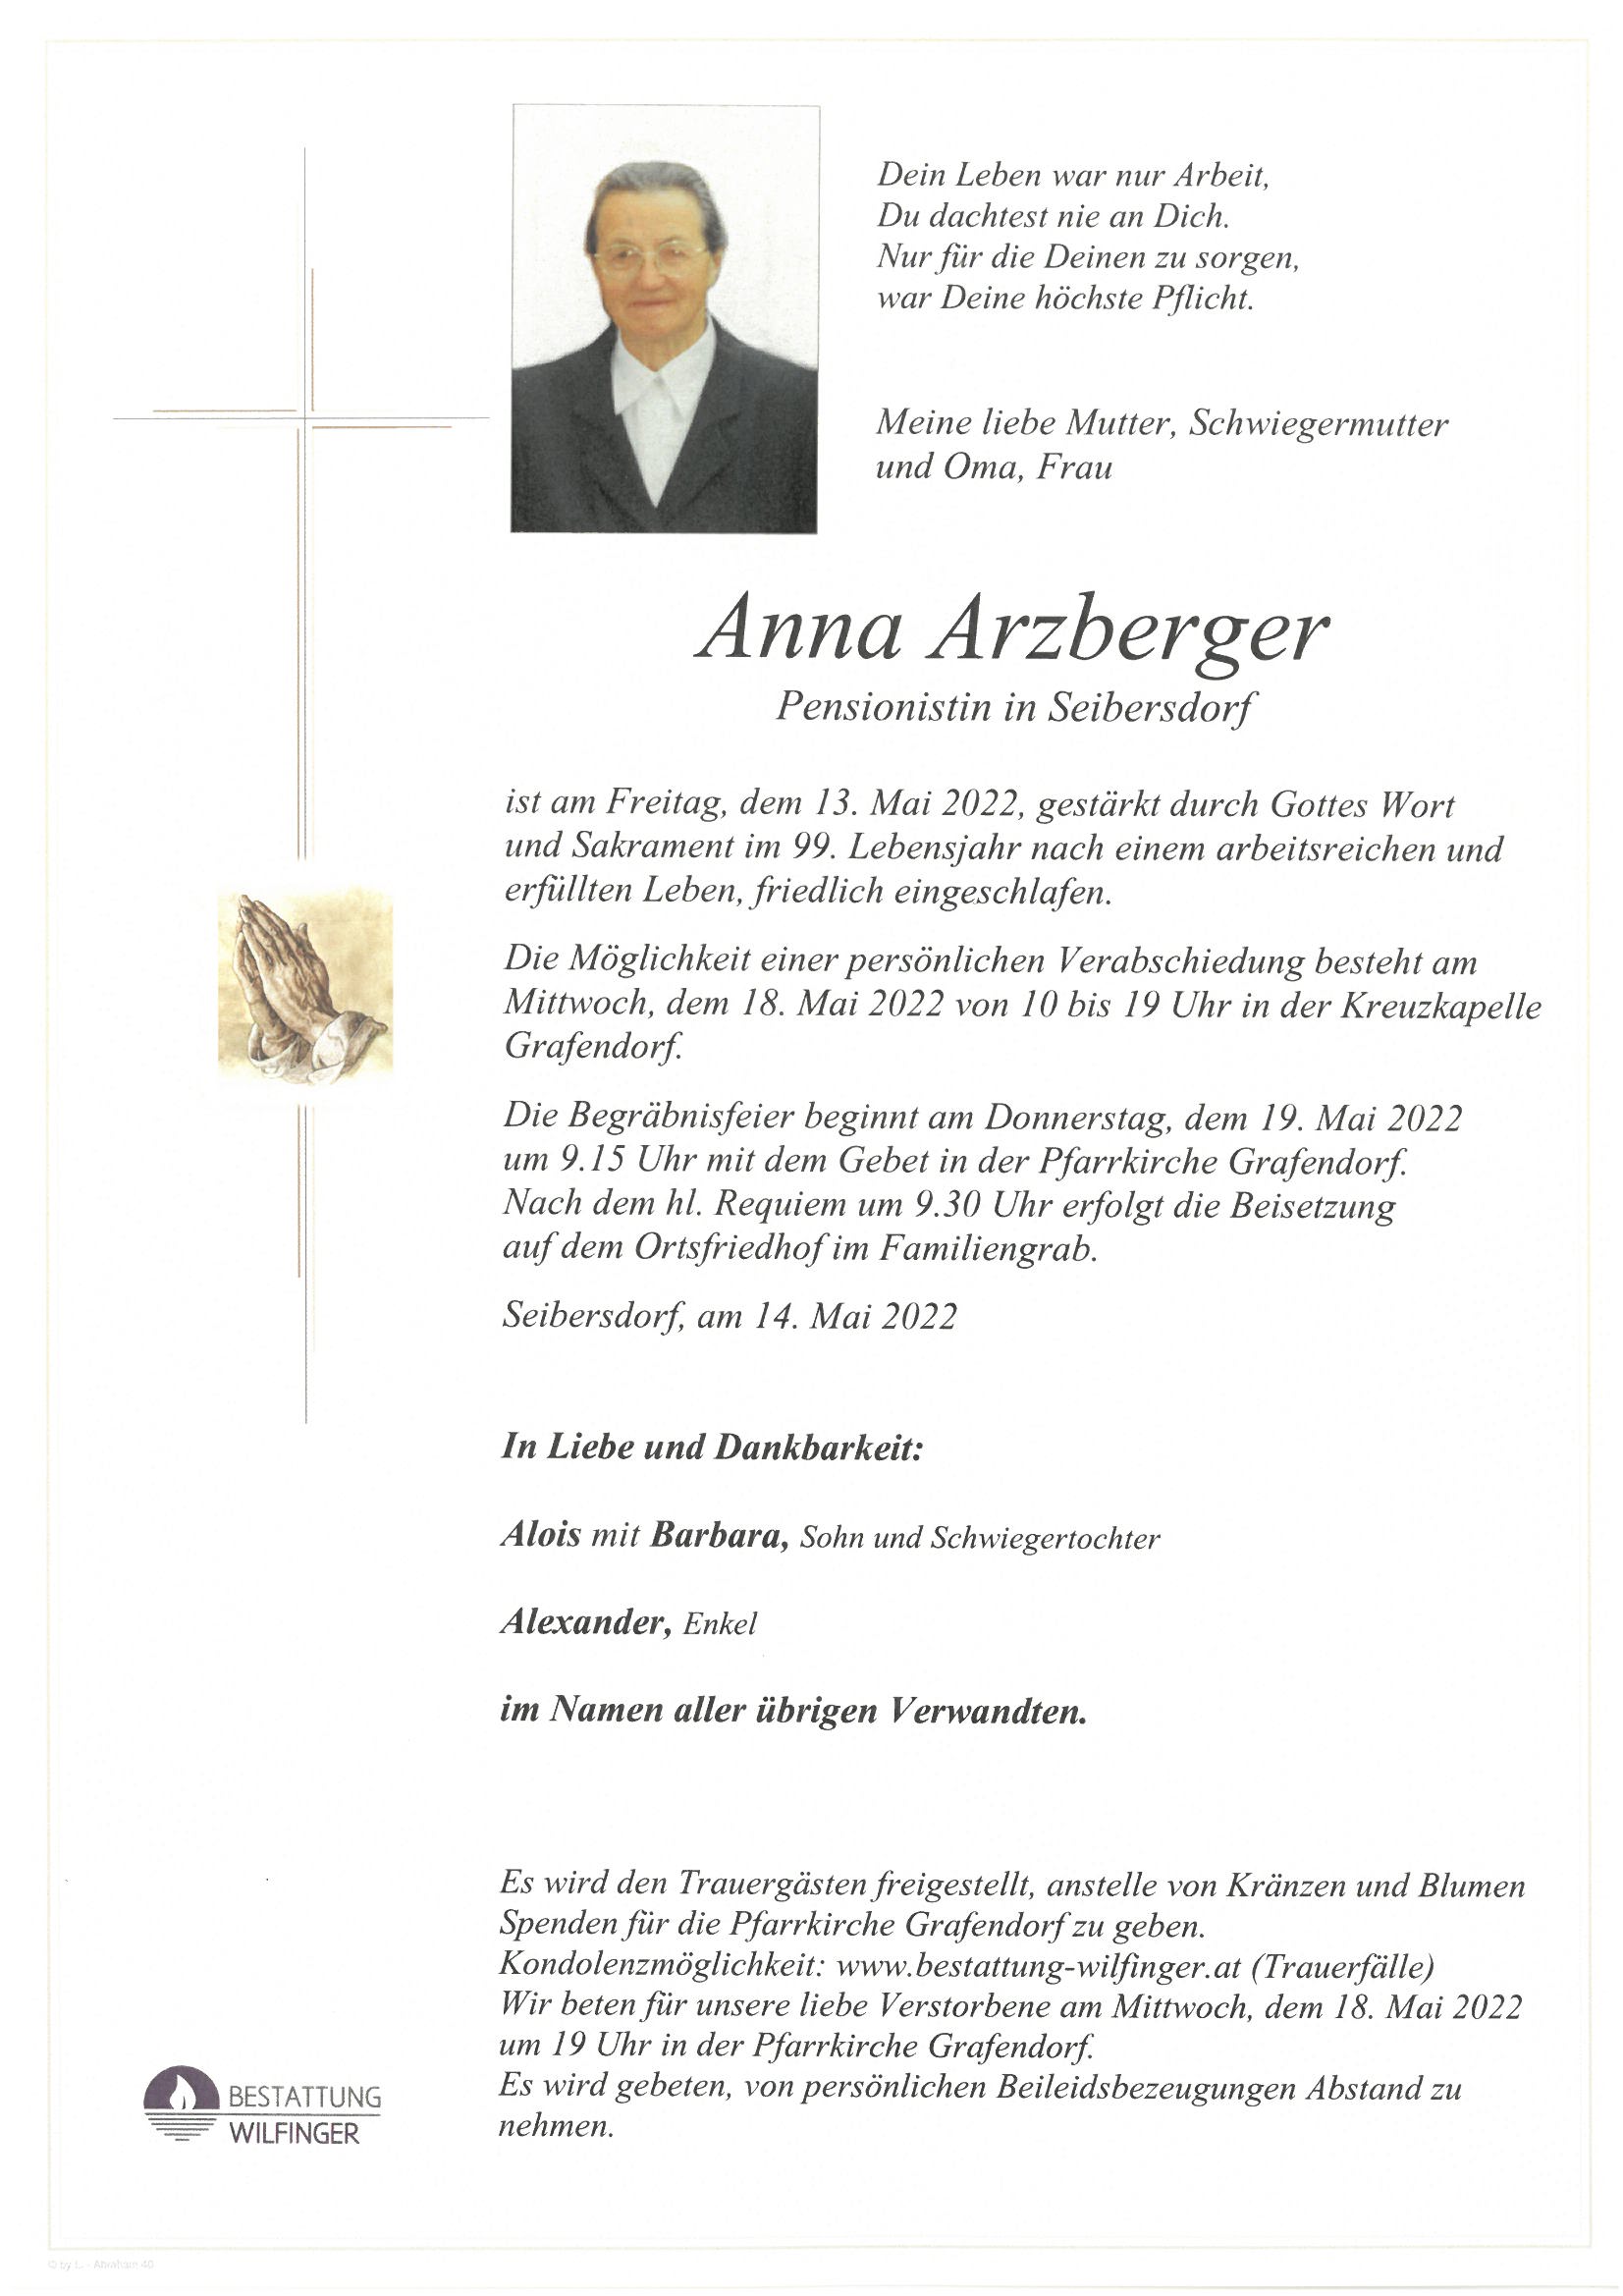 Anna Arzberger, Seibersdorf